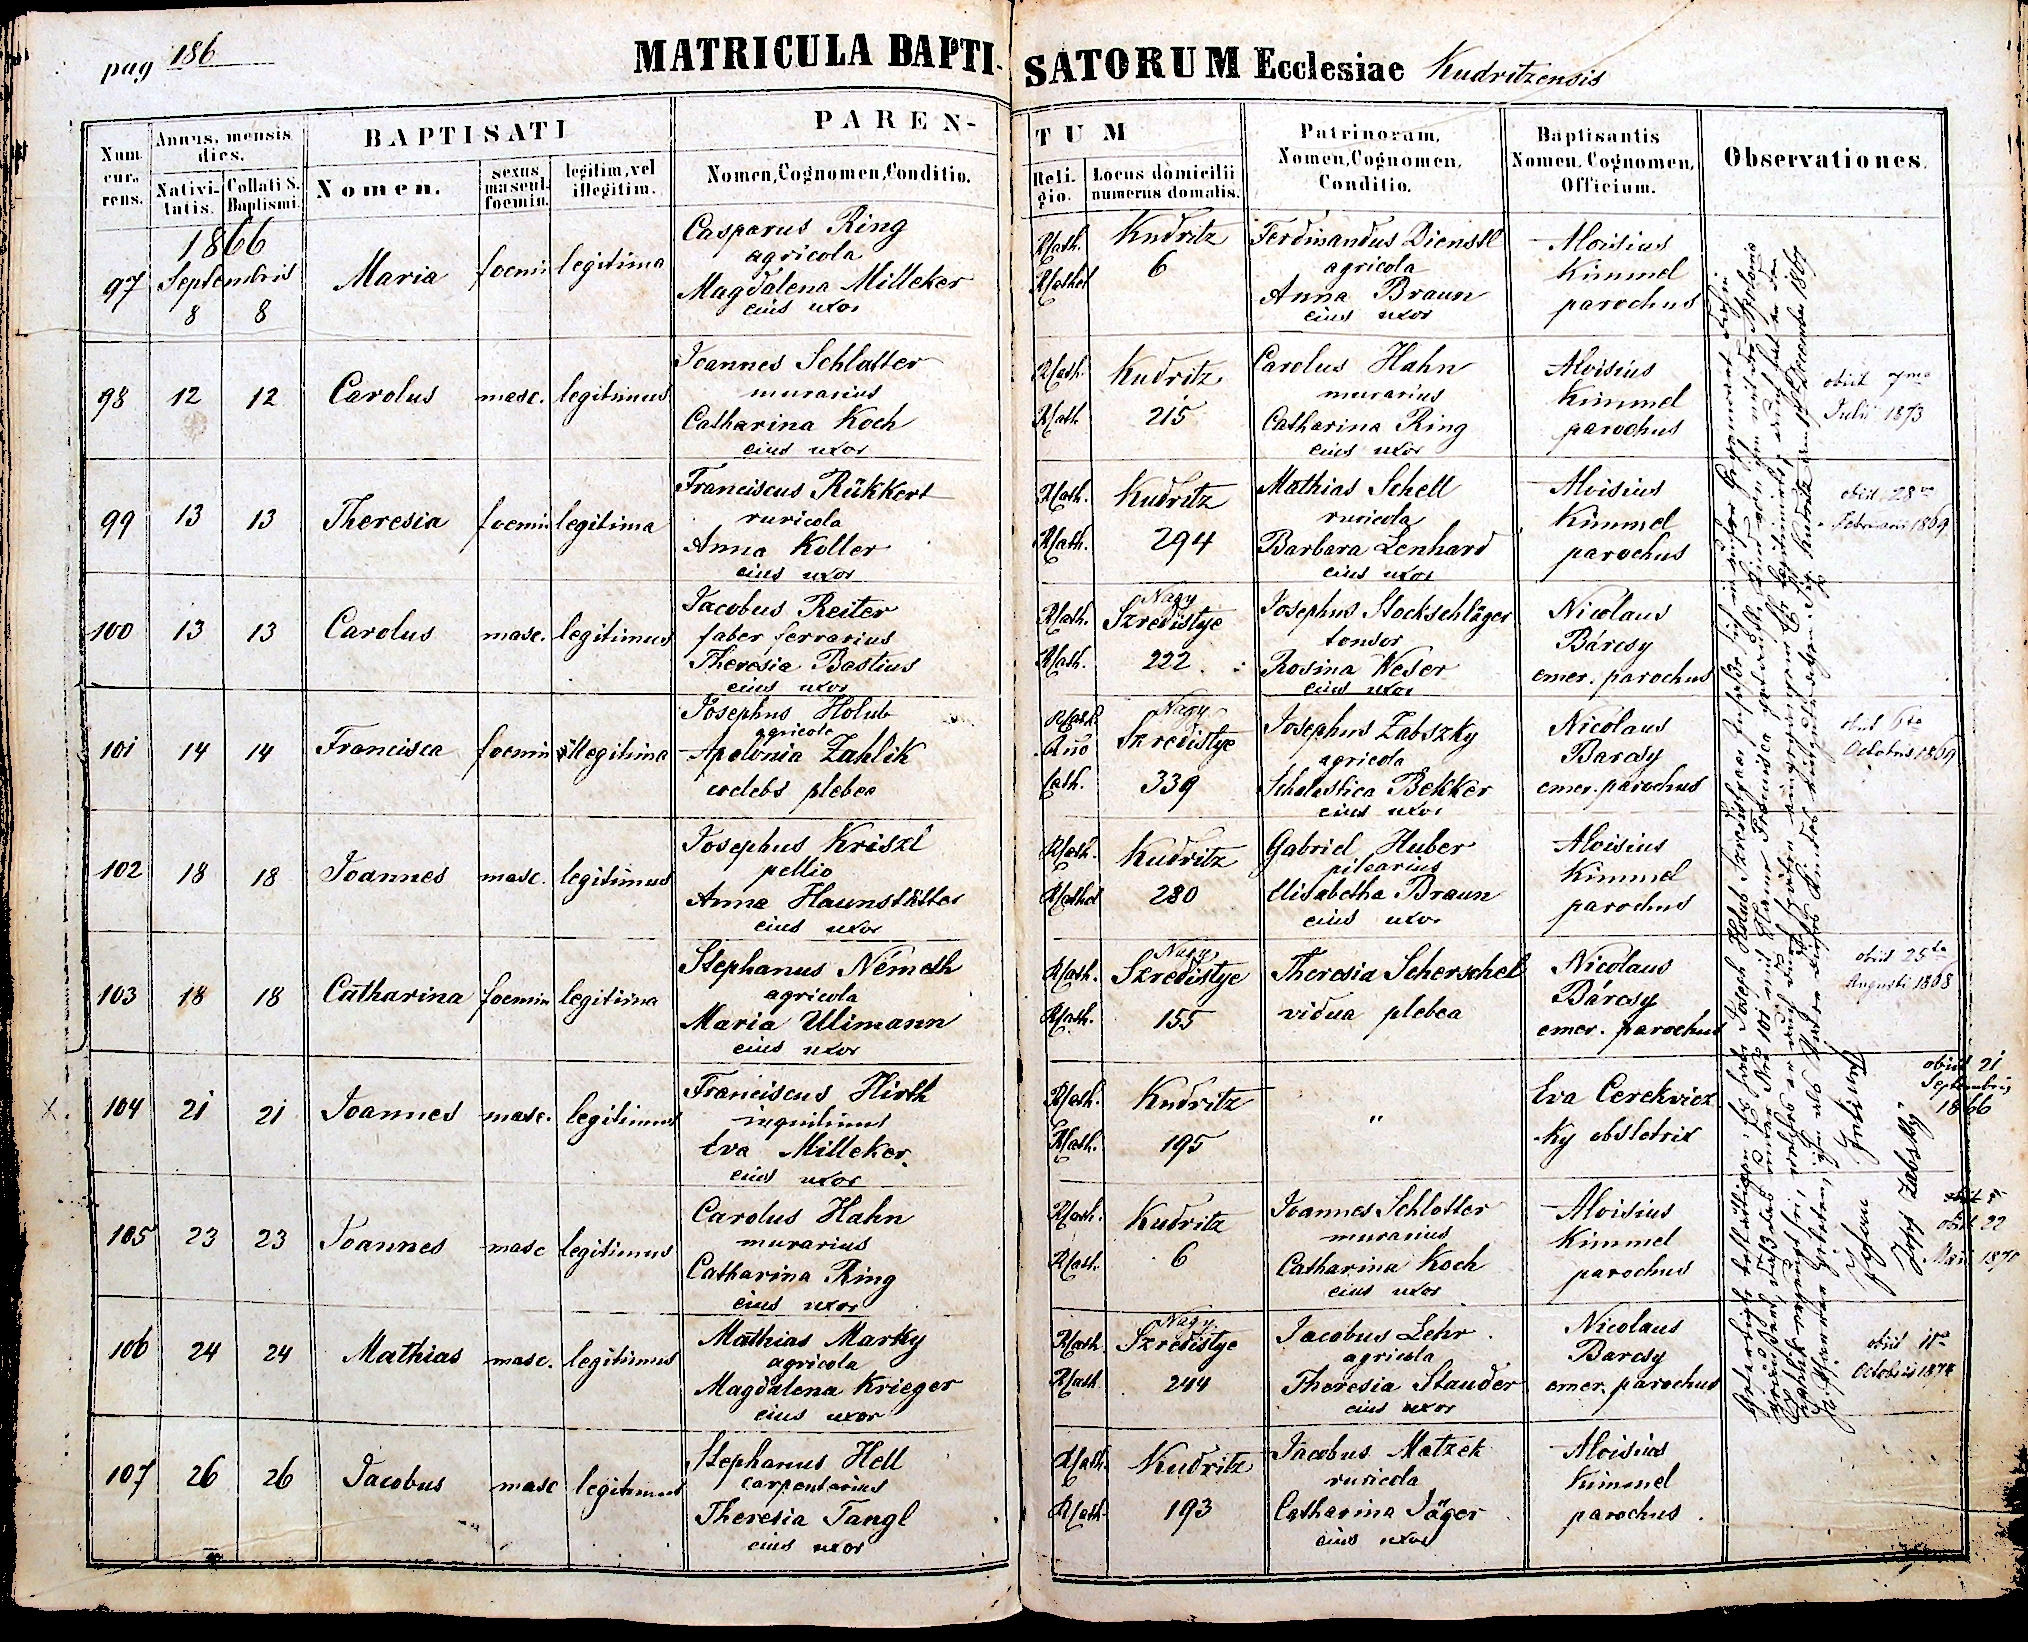 images/church_records/BIRTHS/1852-1870B/186